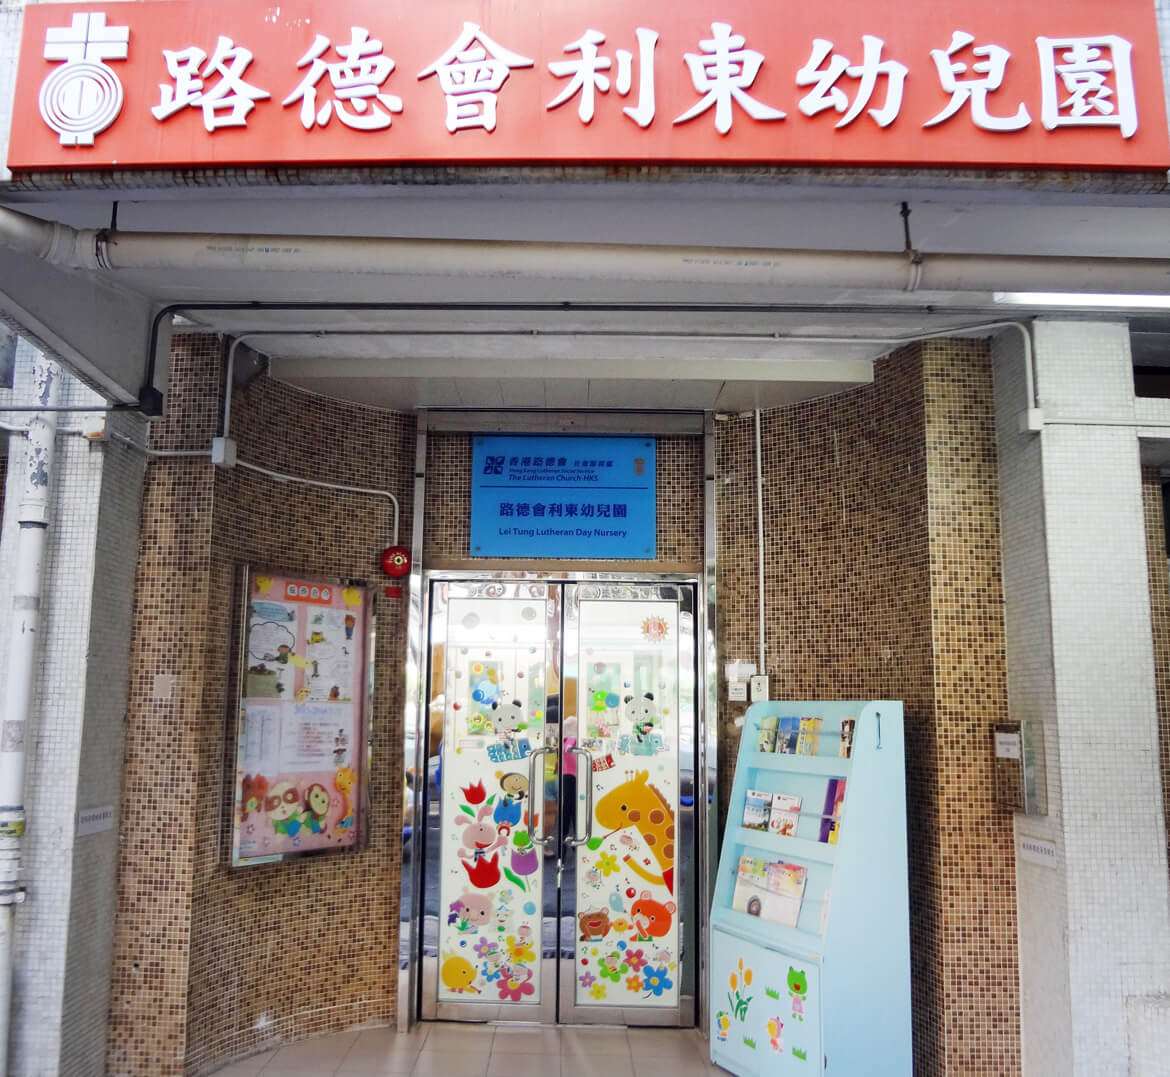 Lei Tung Lutheran Day Nursery